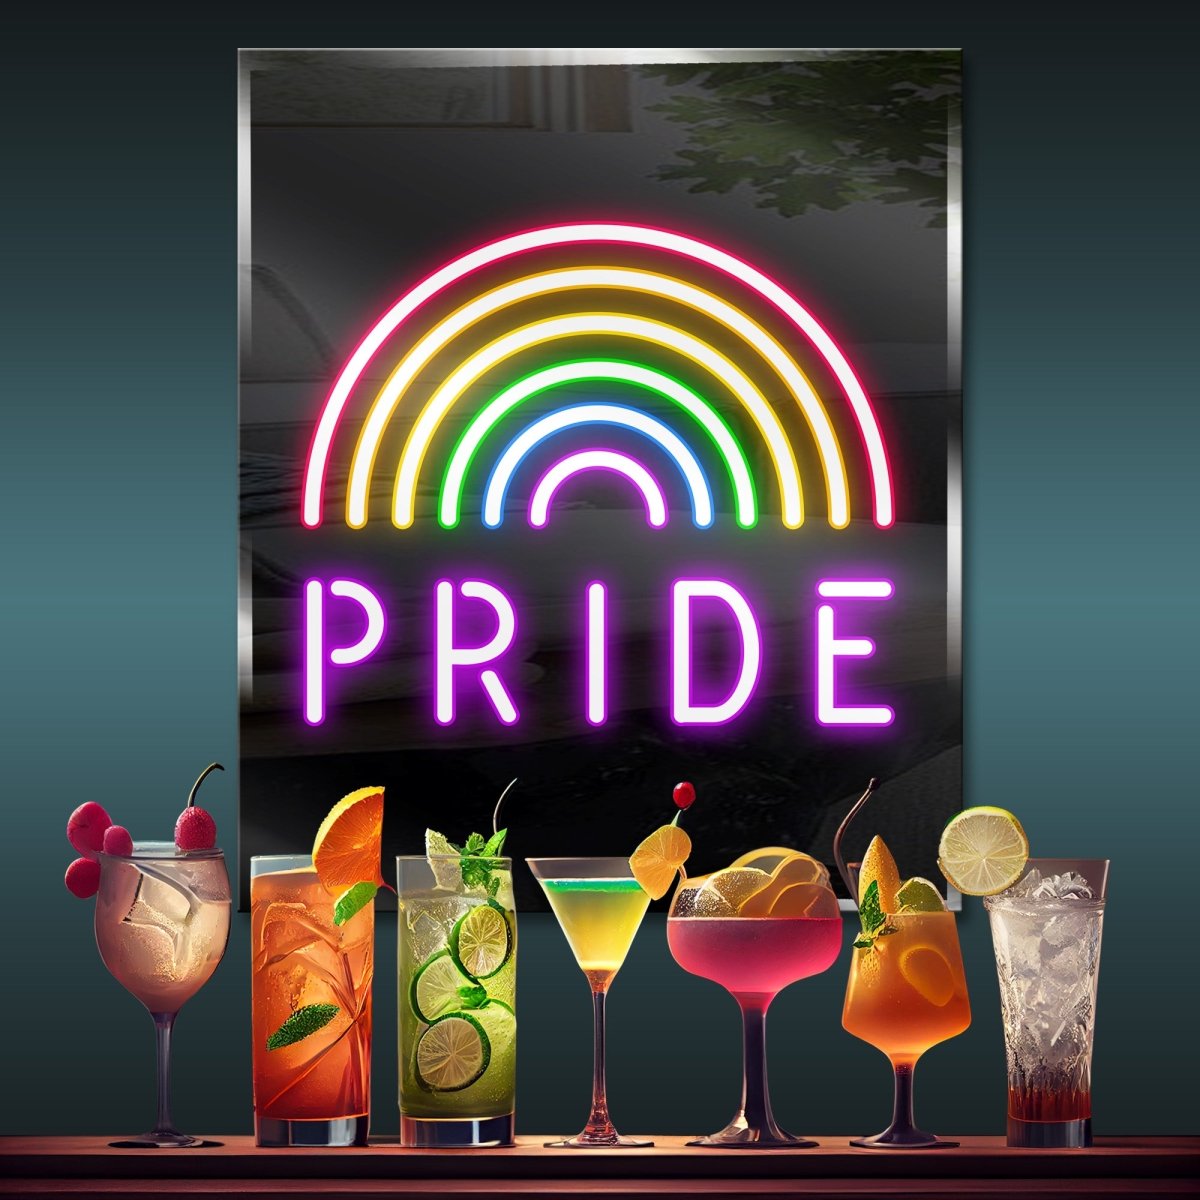 Personalized Neon Sign Pride - madaboutneon